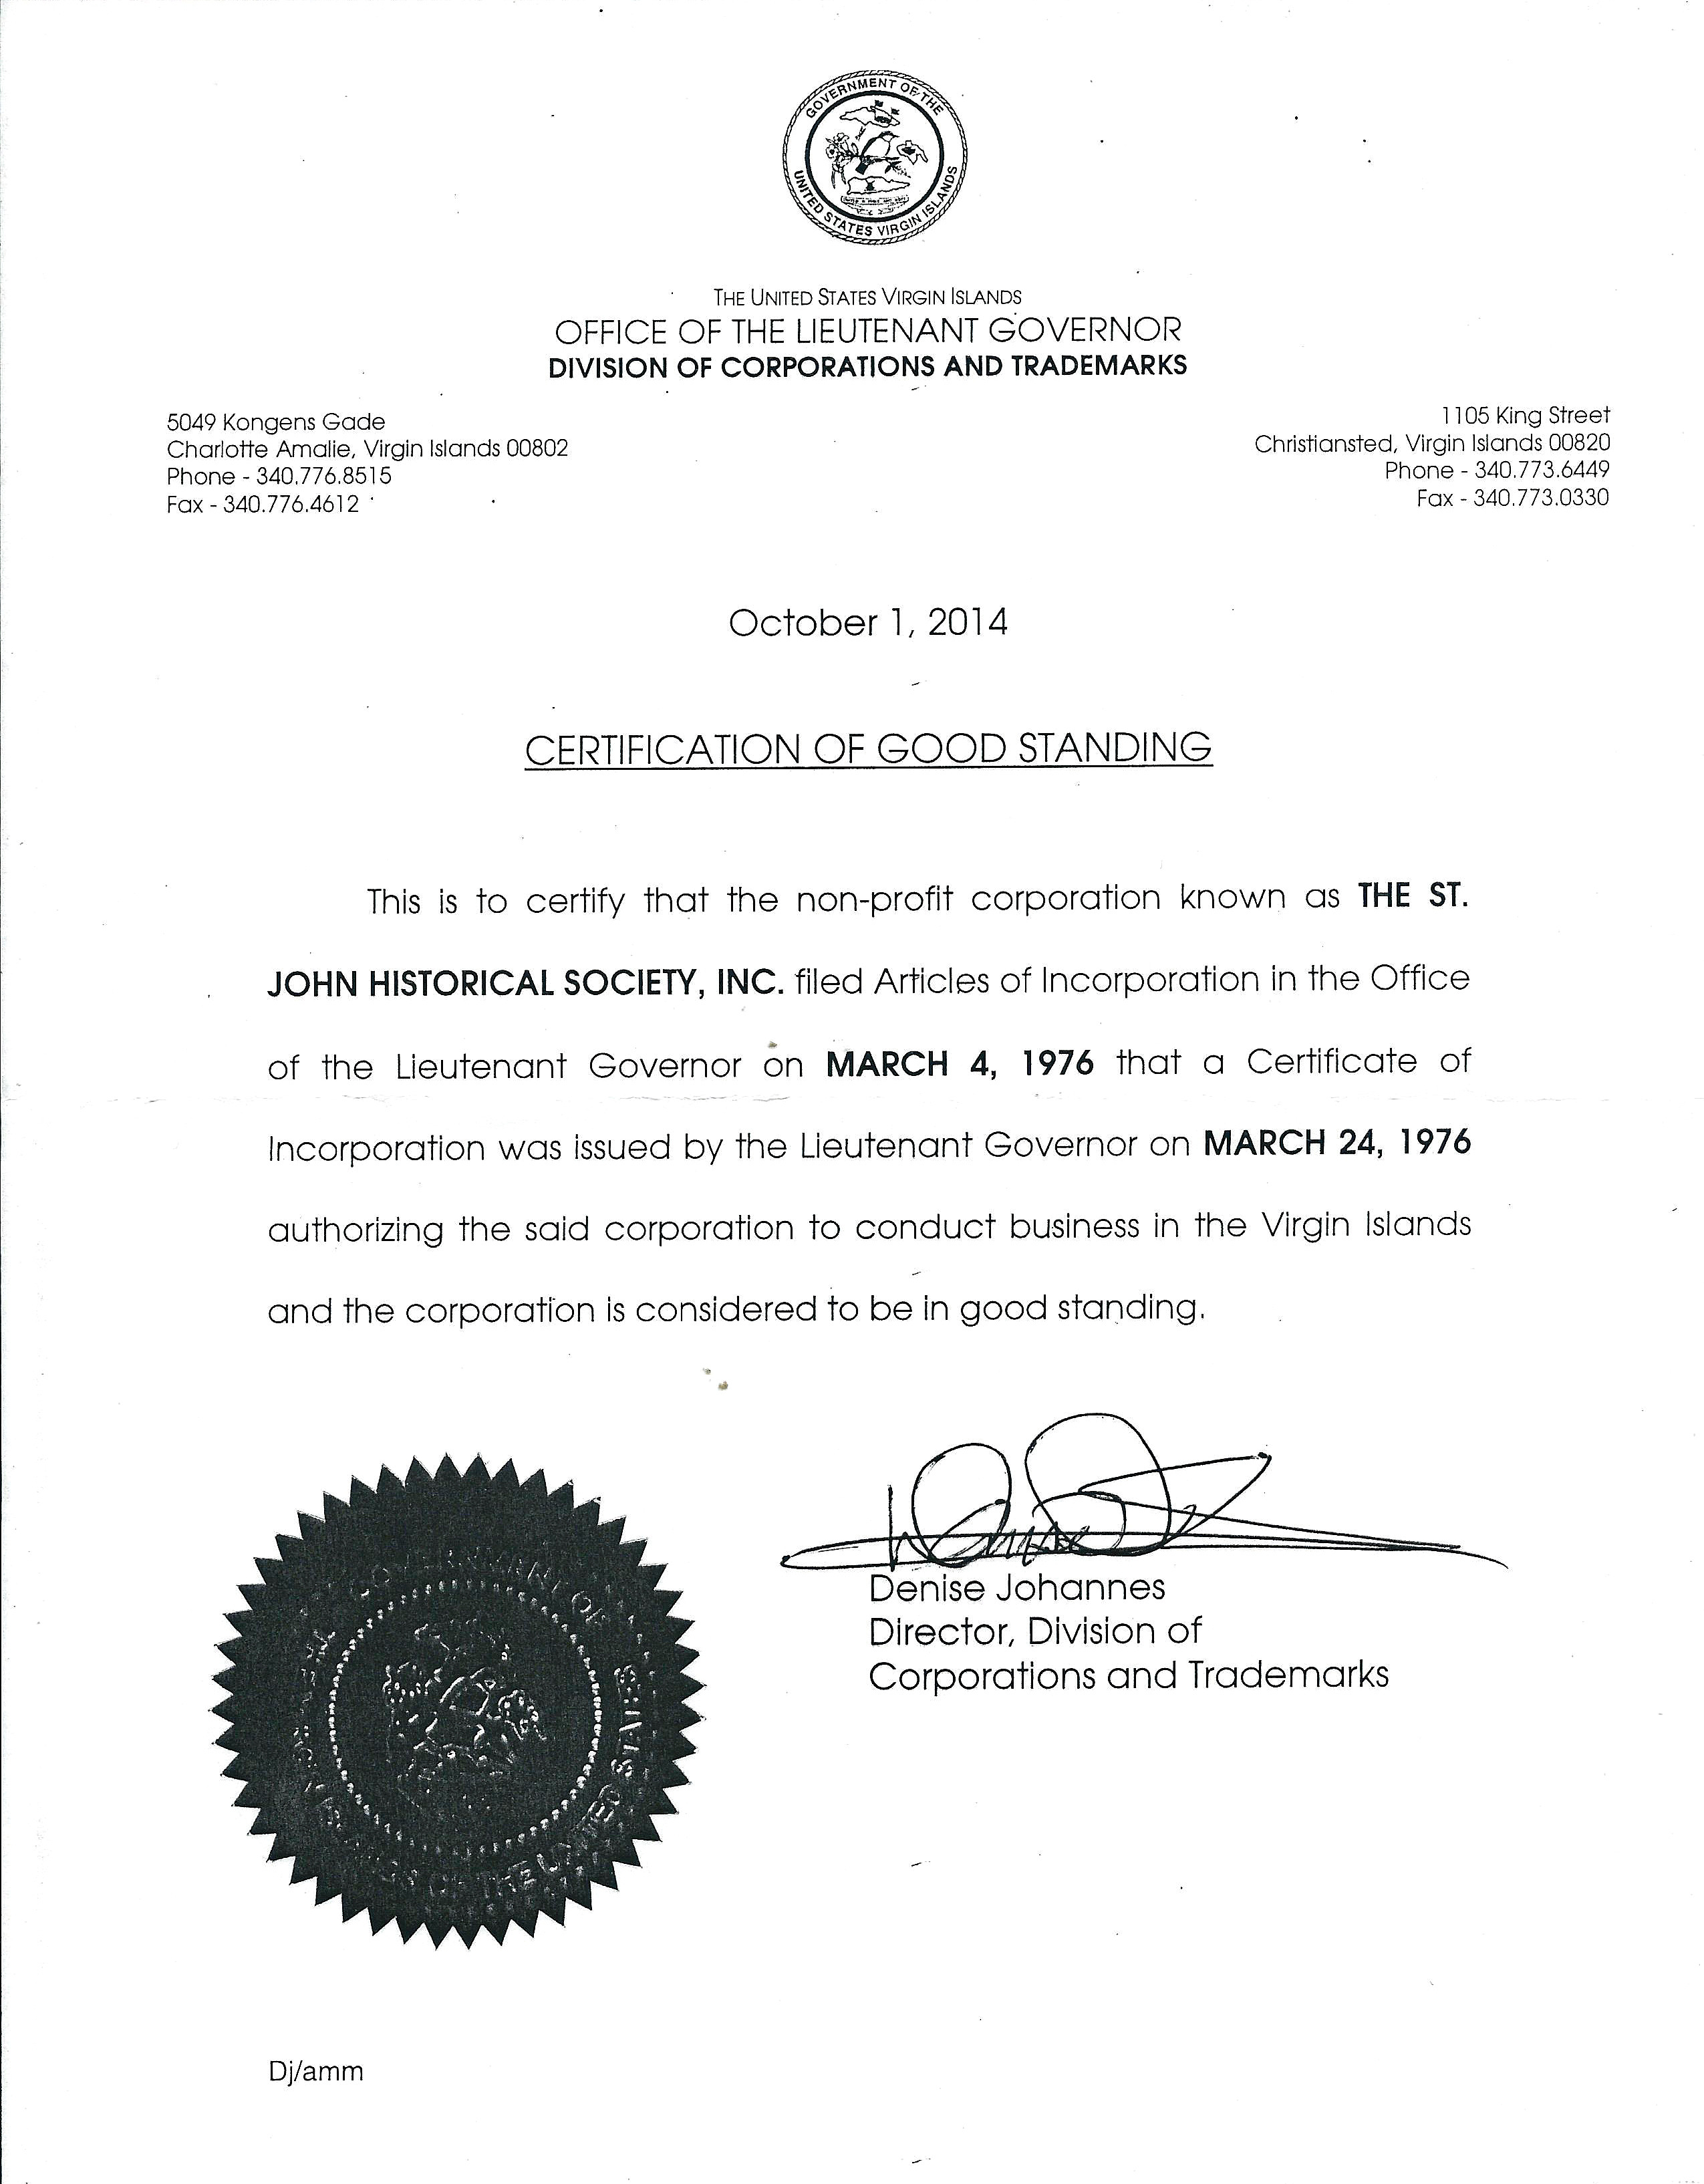 Certificate Of Good Standing Oct. 1 2014 E1413106347815 